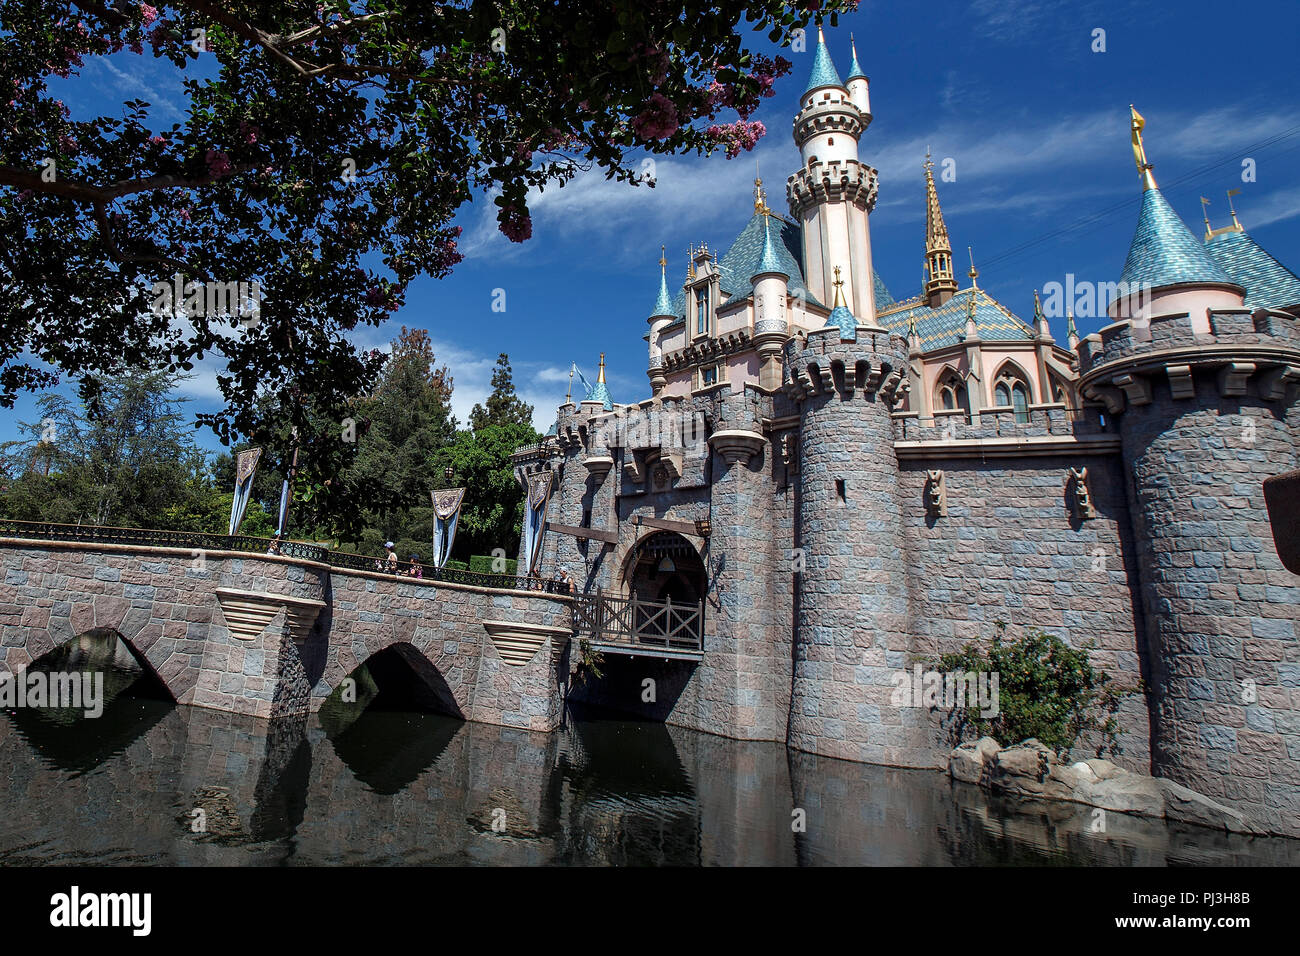 Sleeping Beauty Castle, Disneyland Park, Anaheim, California, United States of America Stock Photo